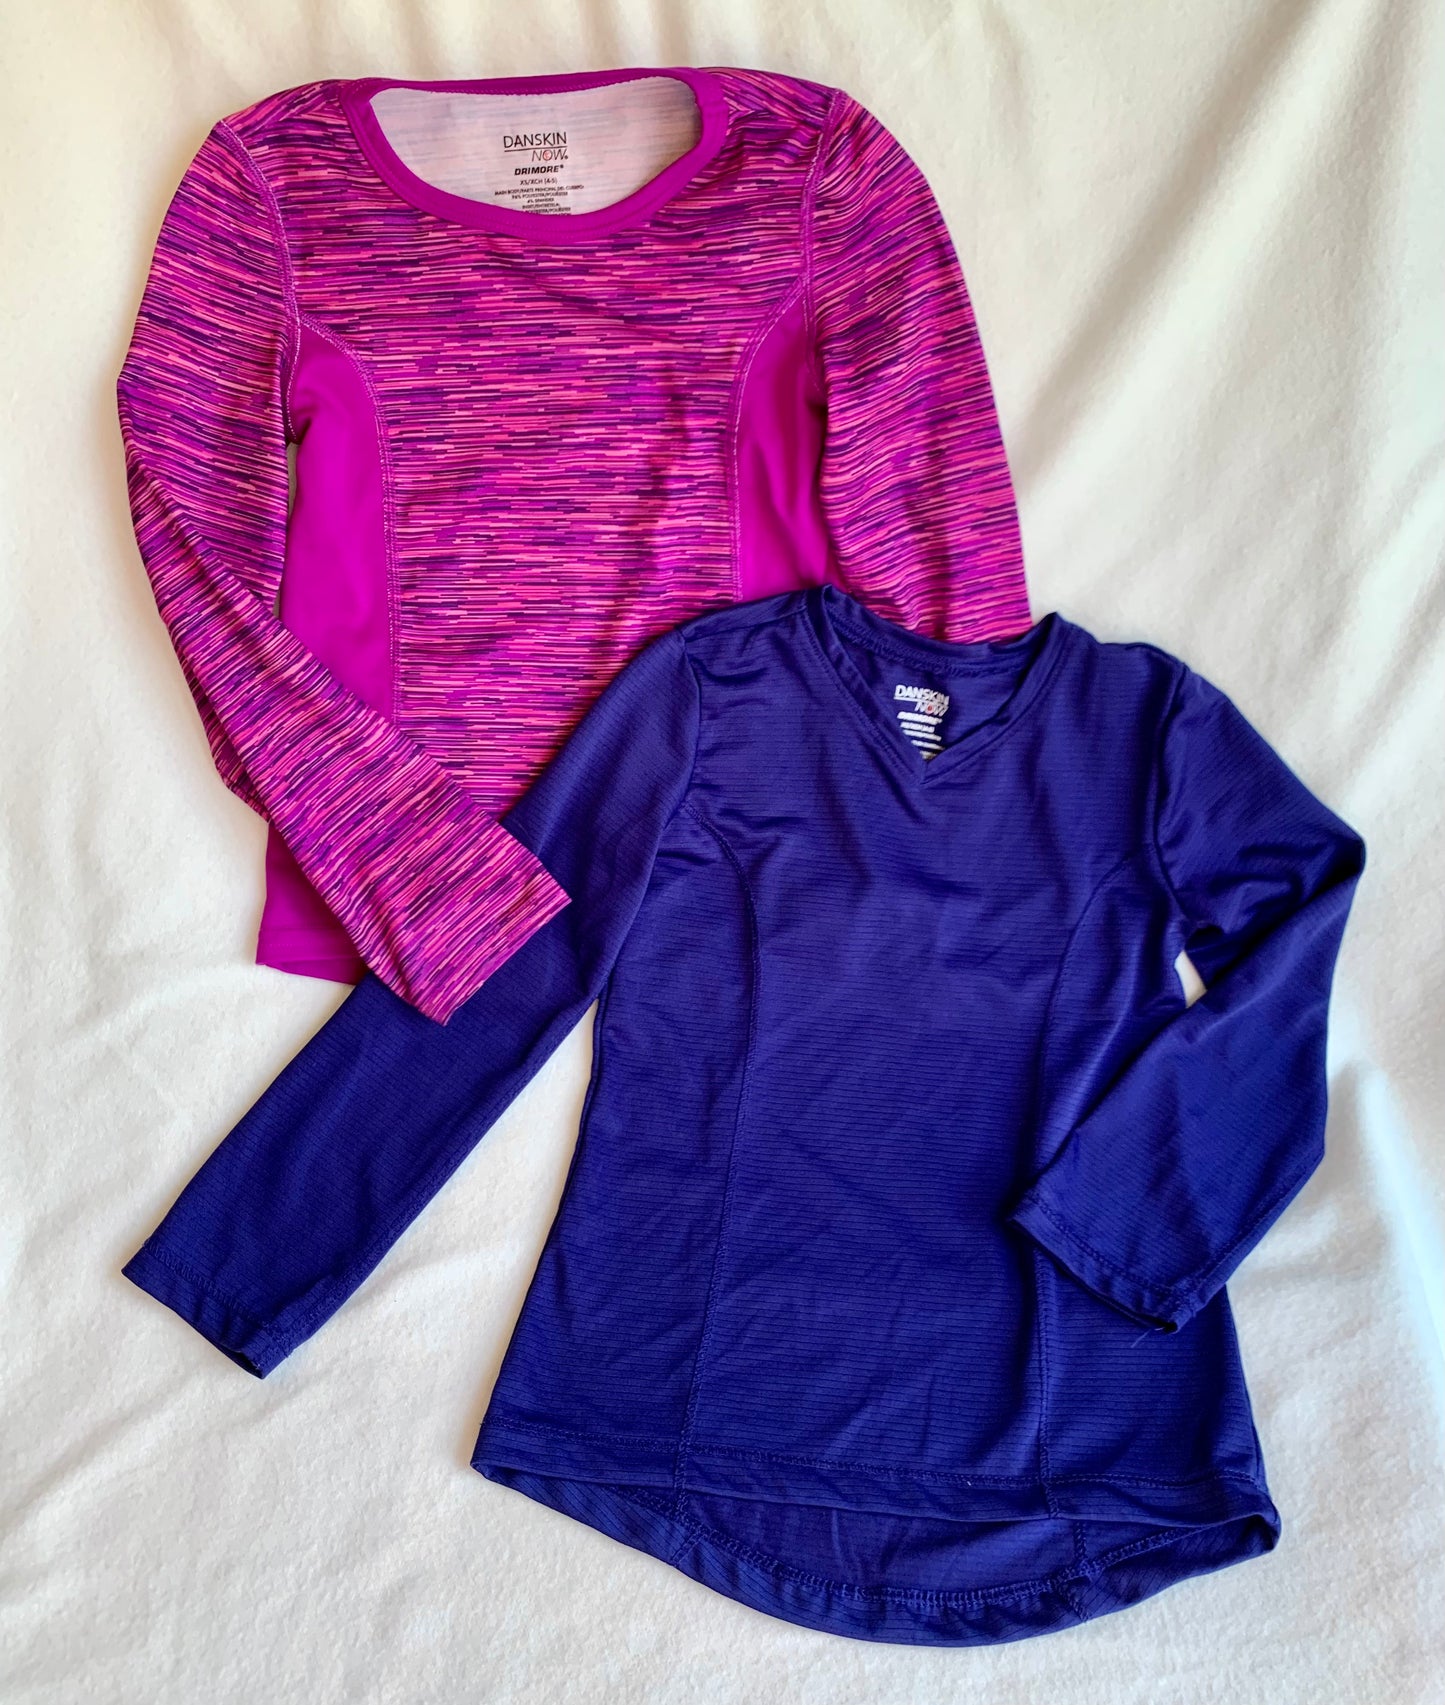 Size 4/5 Danskin Now “Drimore” Girl’s Athletic Shirt Bundle - Purples